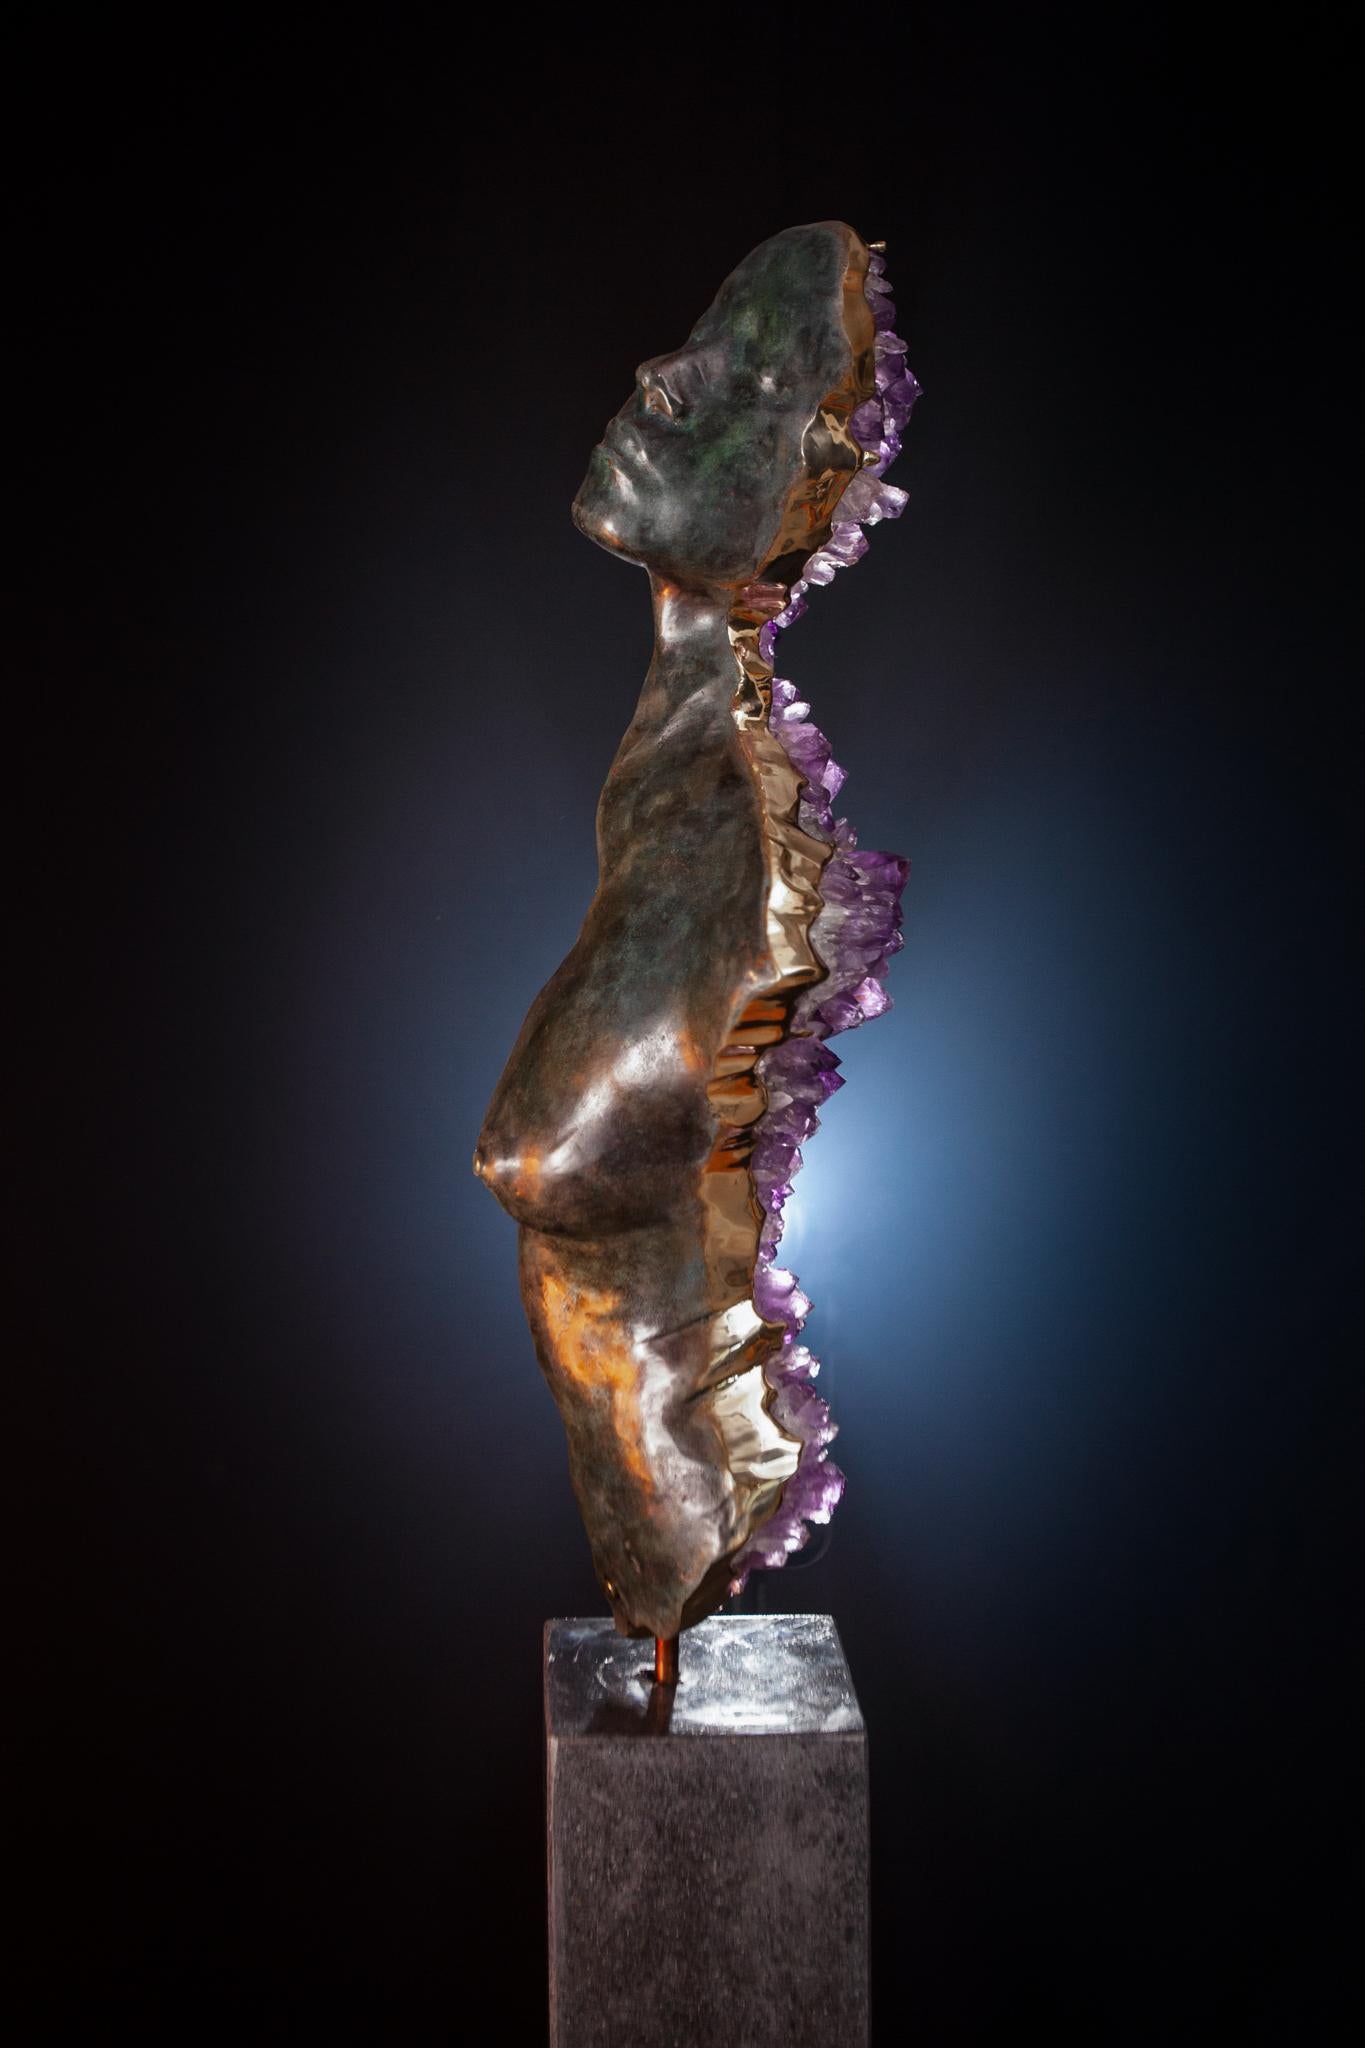 Abstract Sculpture James Lomax - ÉTAT LIMINAL  cristals d'améthyste, sculpture